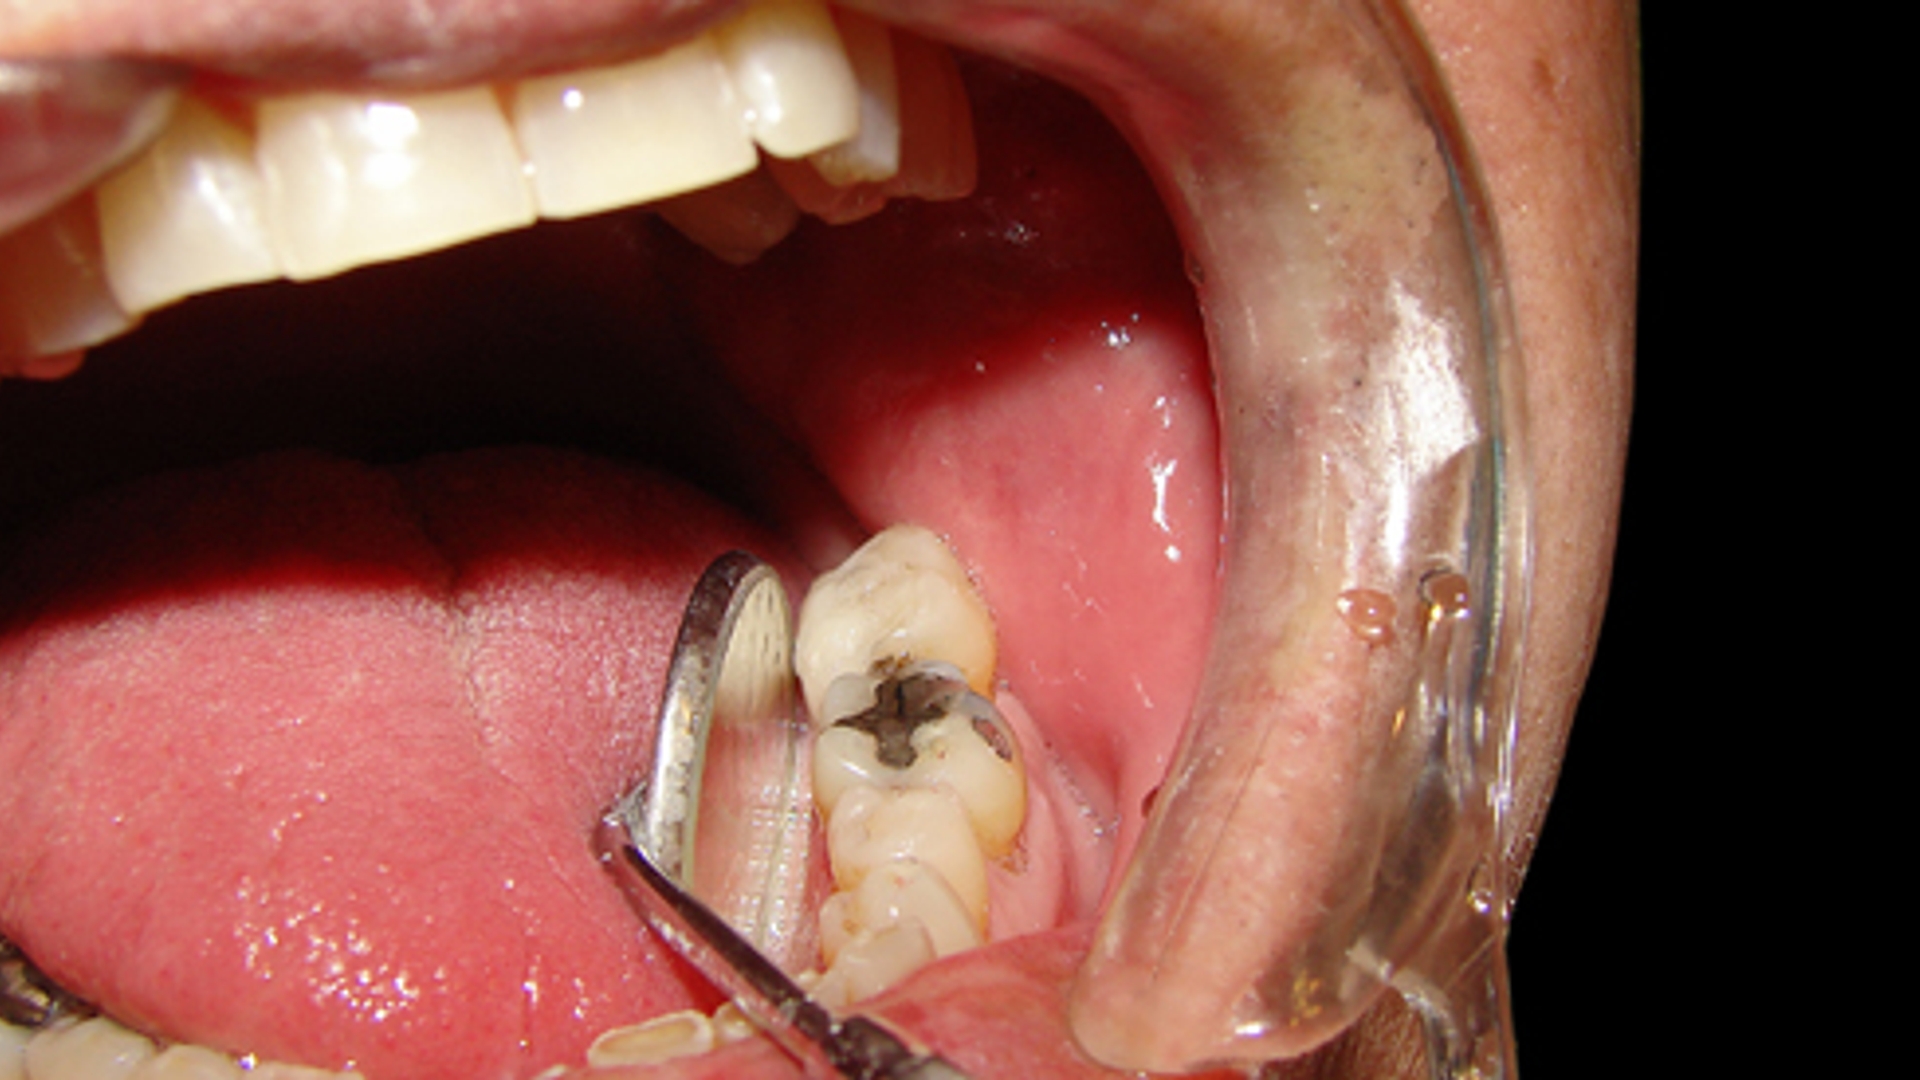 tandartsbehandeling_05.jpg